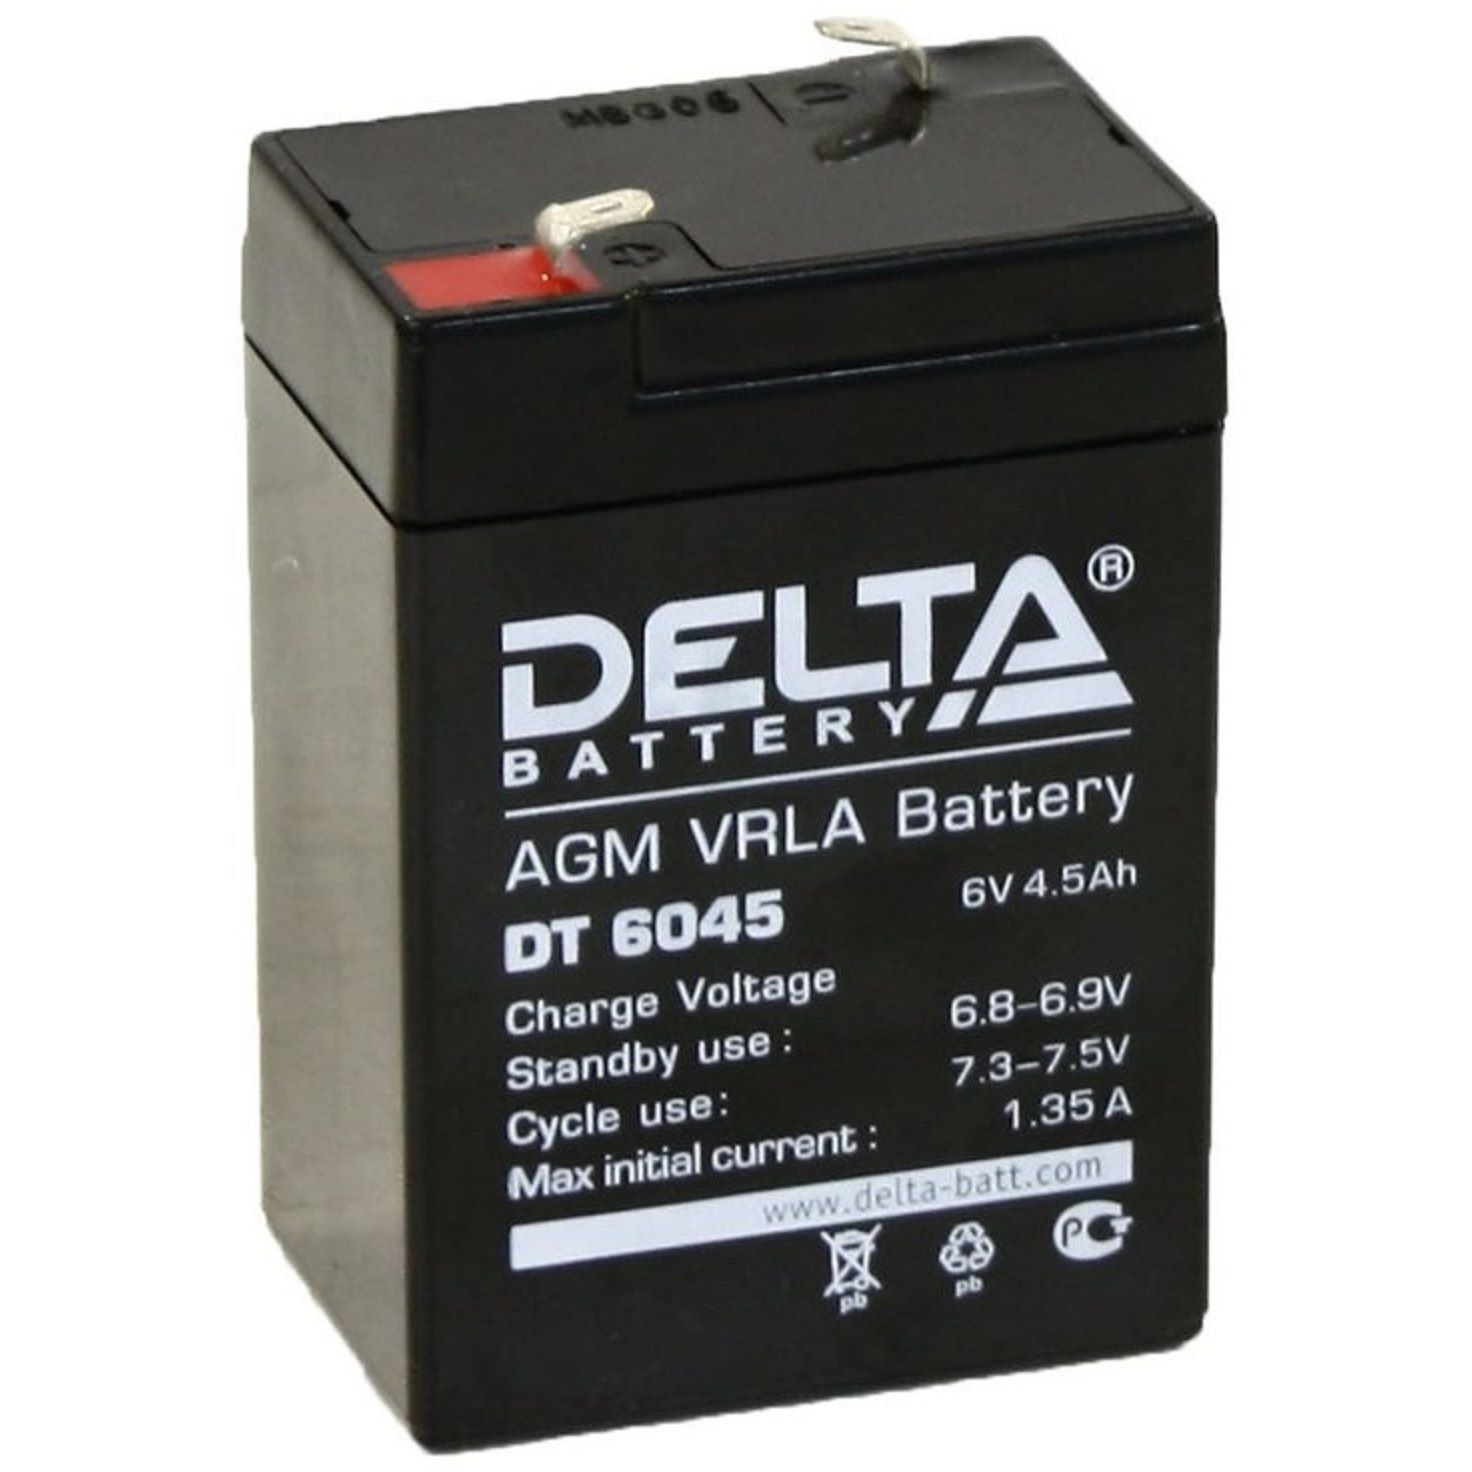 Battery цена. Аккумулятор Delta 6v 4.5Ah. Delta DT 6045 (6v / 4.5Ah). DT 4045 Delta аккумуляторная батарея. Аккумуляторная батарея Delta DT 6045.